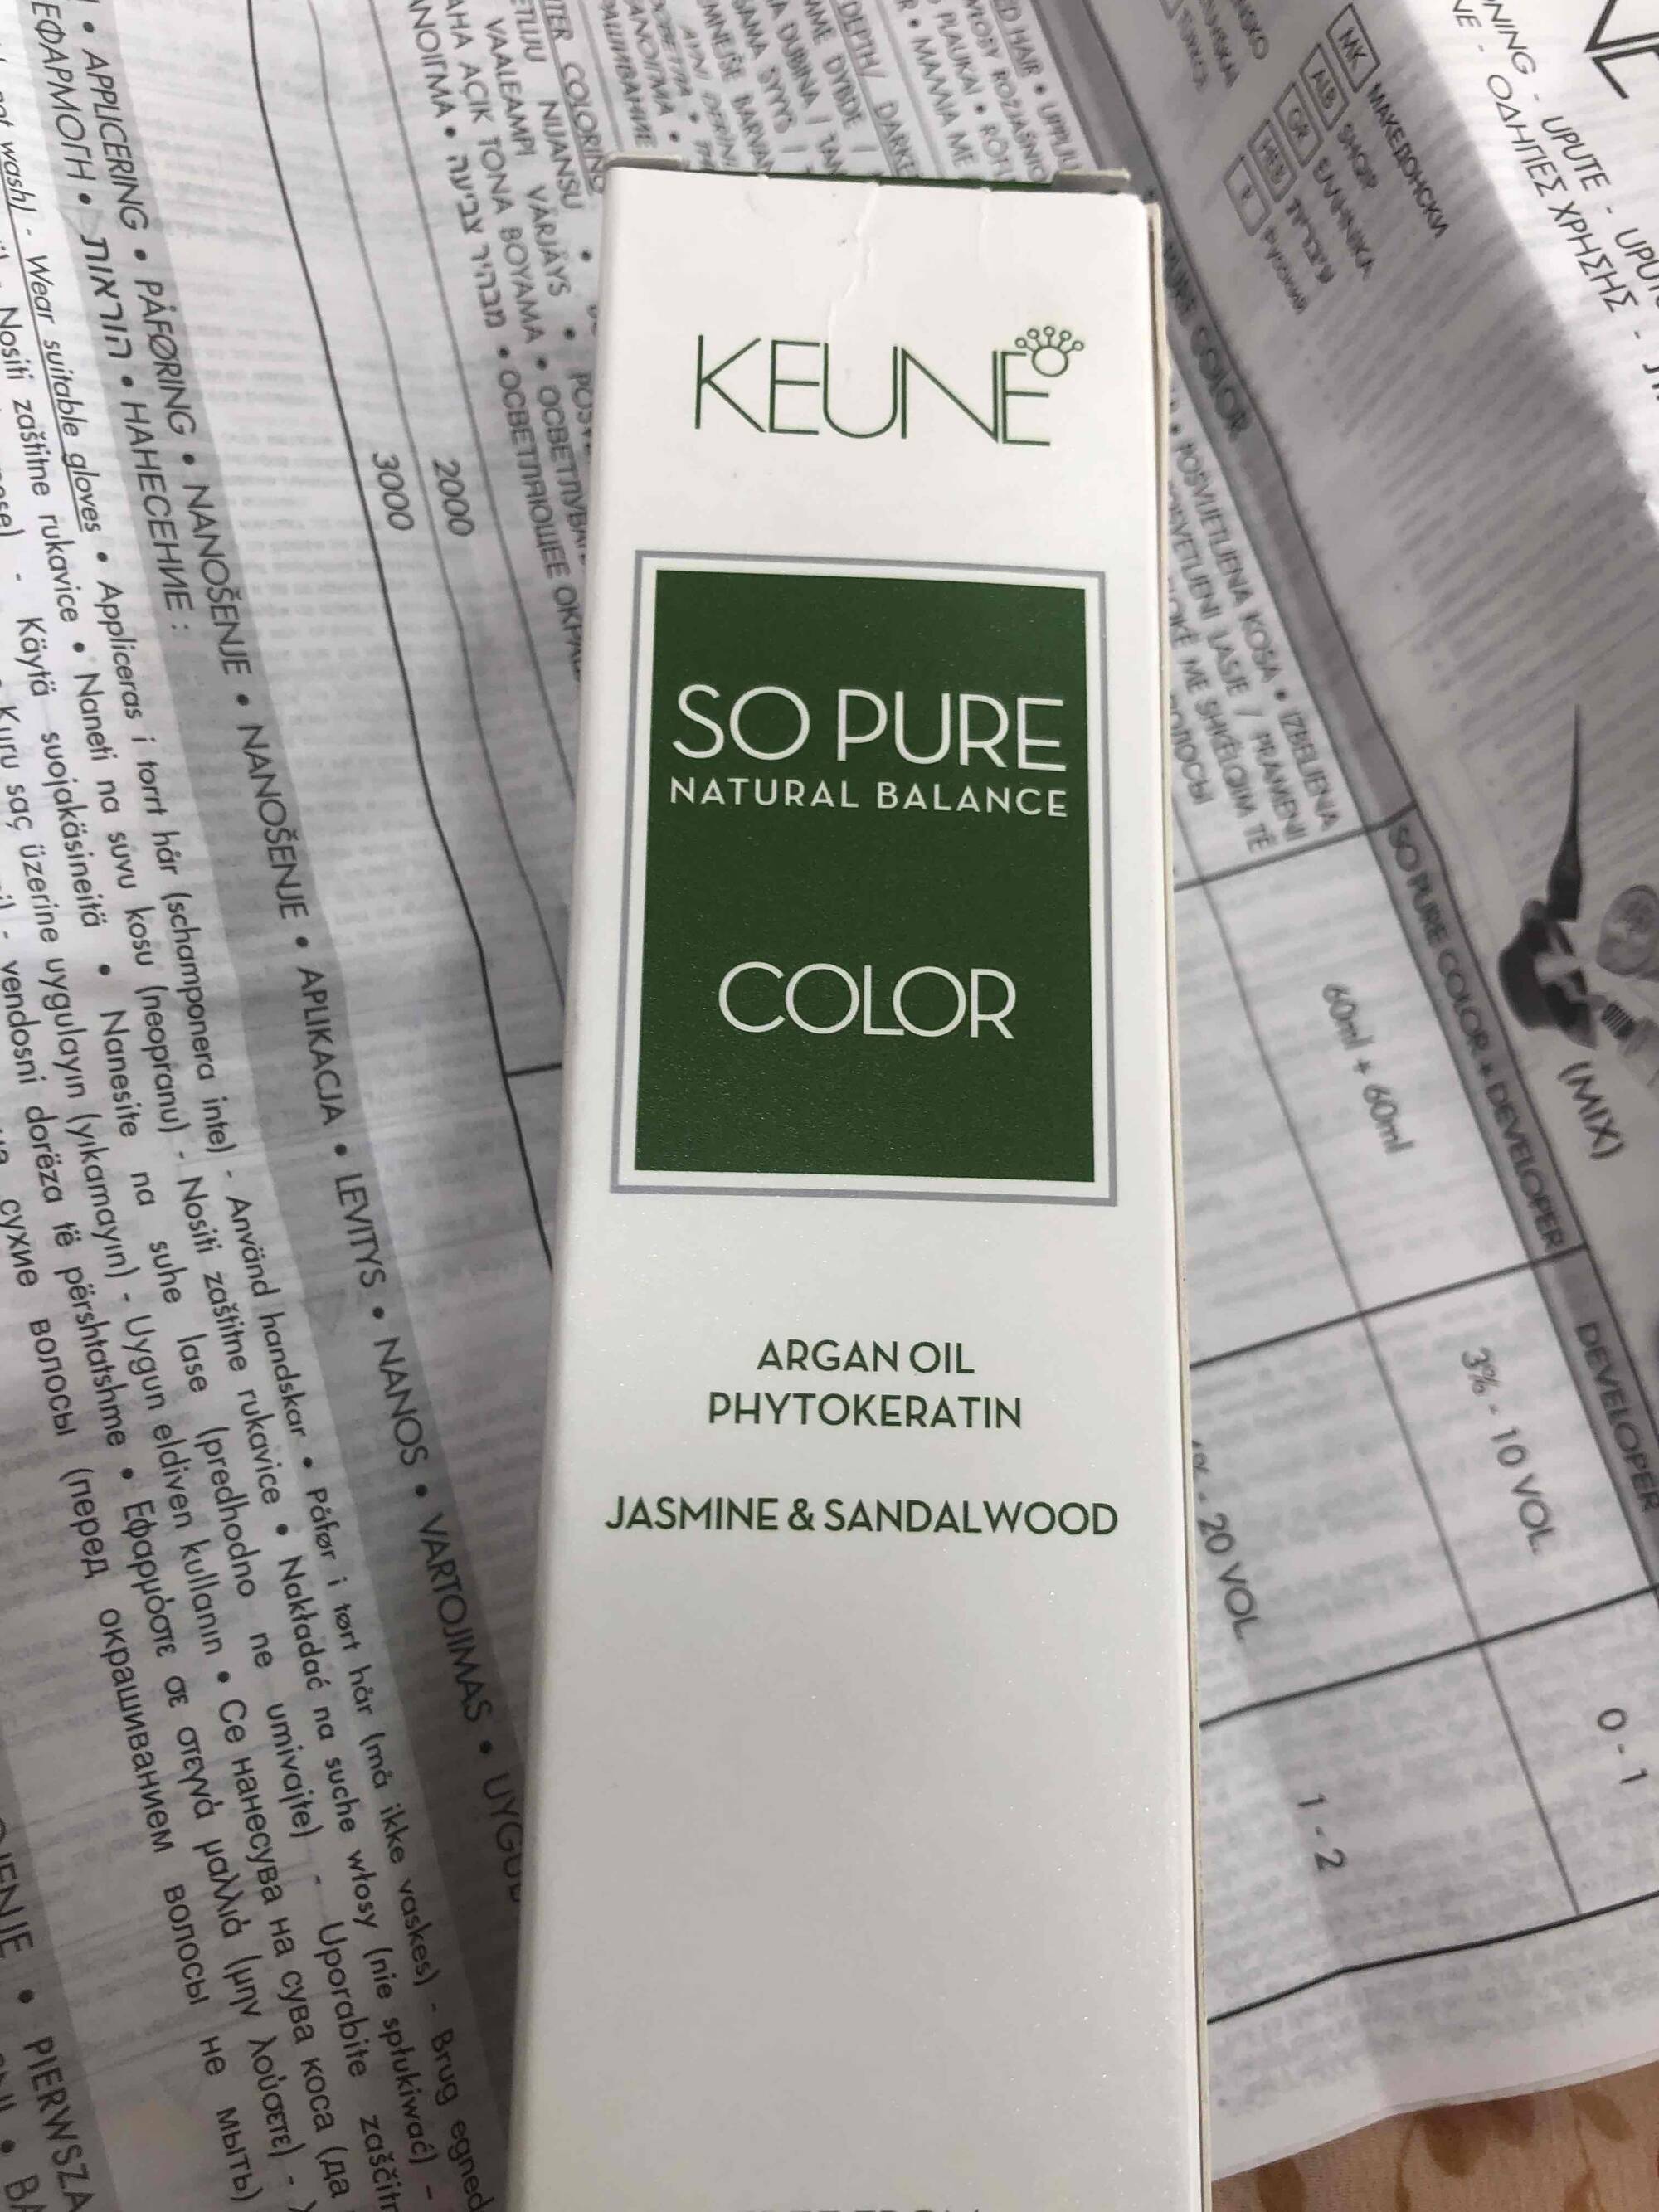 KEUNE - So pure color jasmine & sandalwood